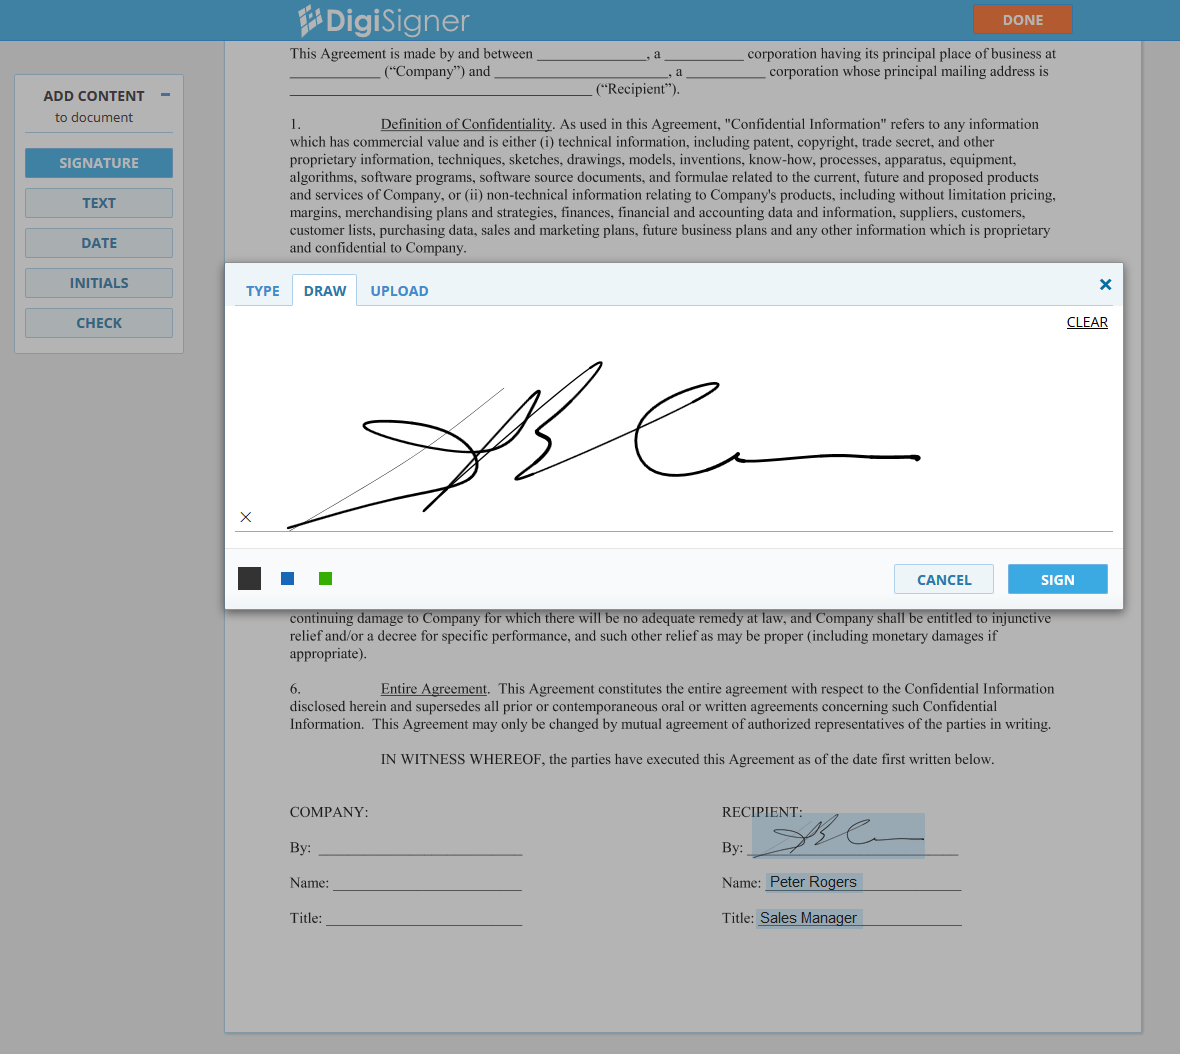 pdf create signature from image